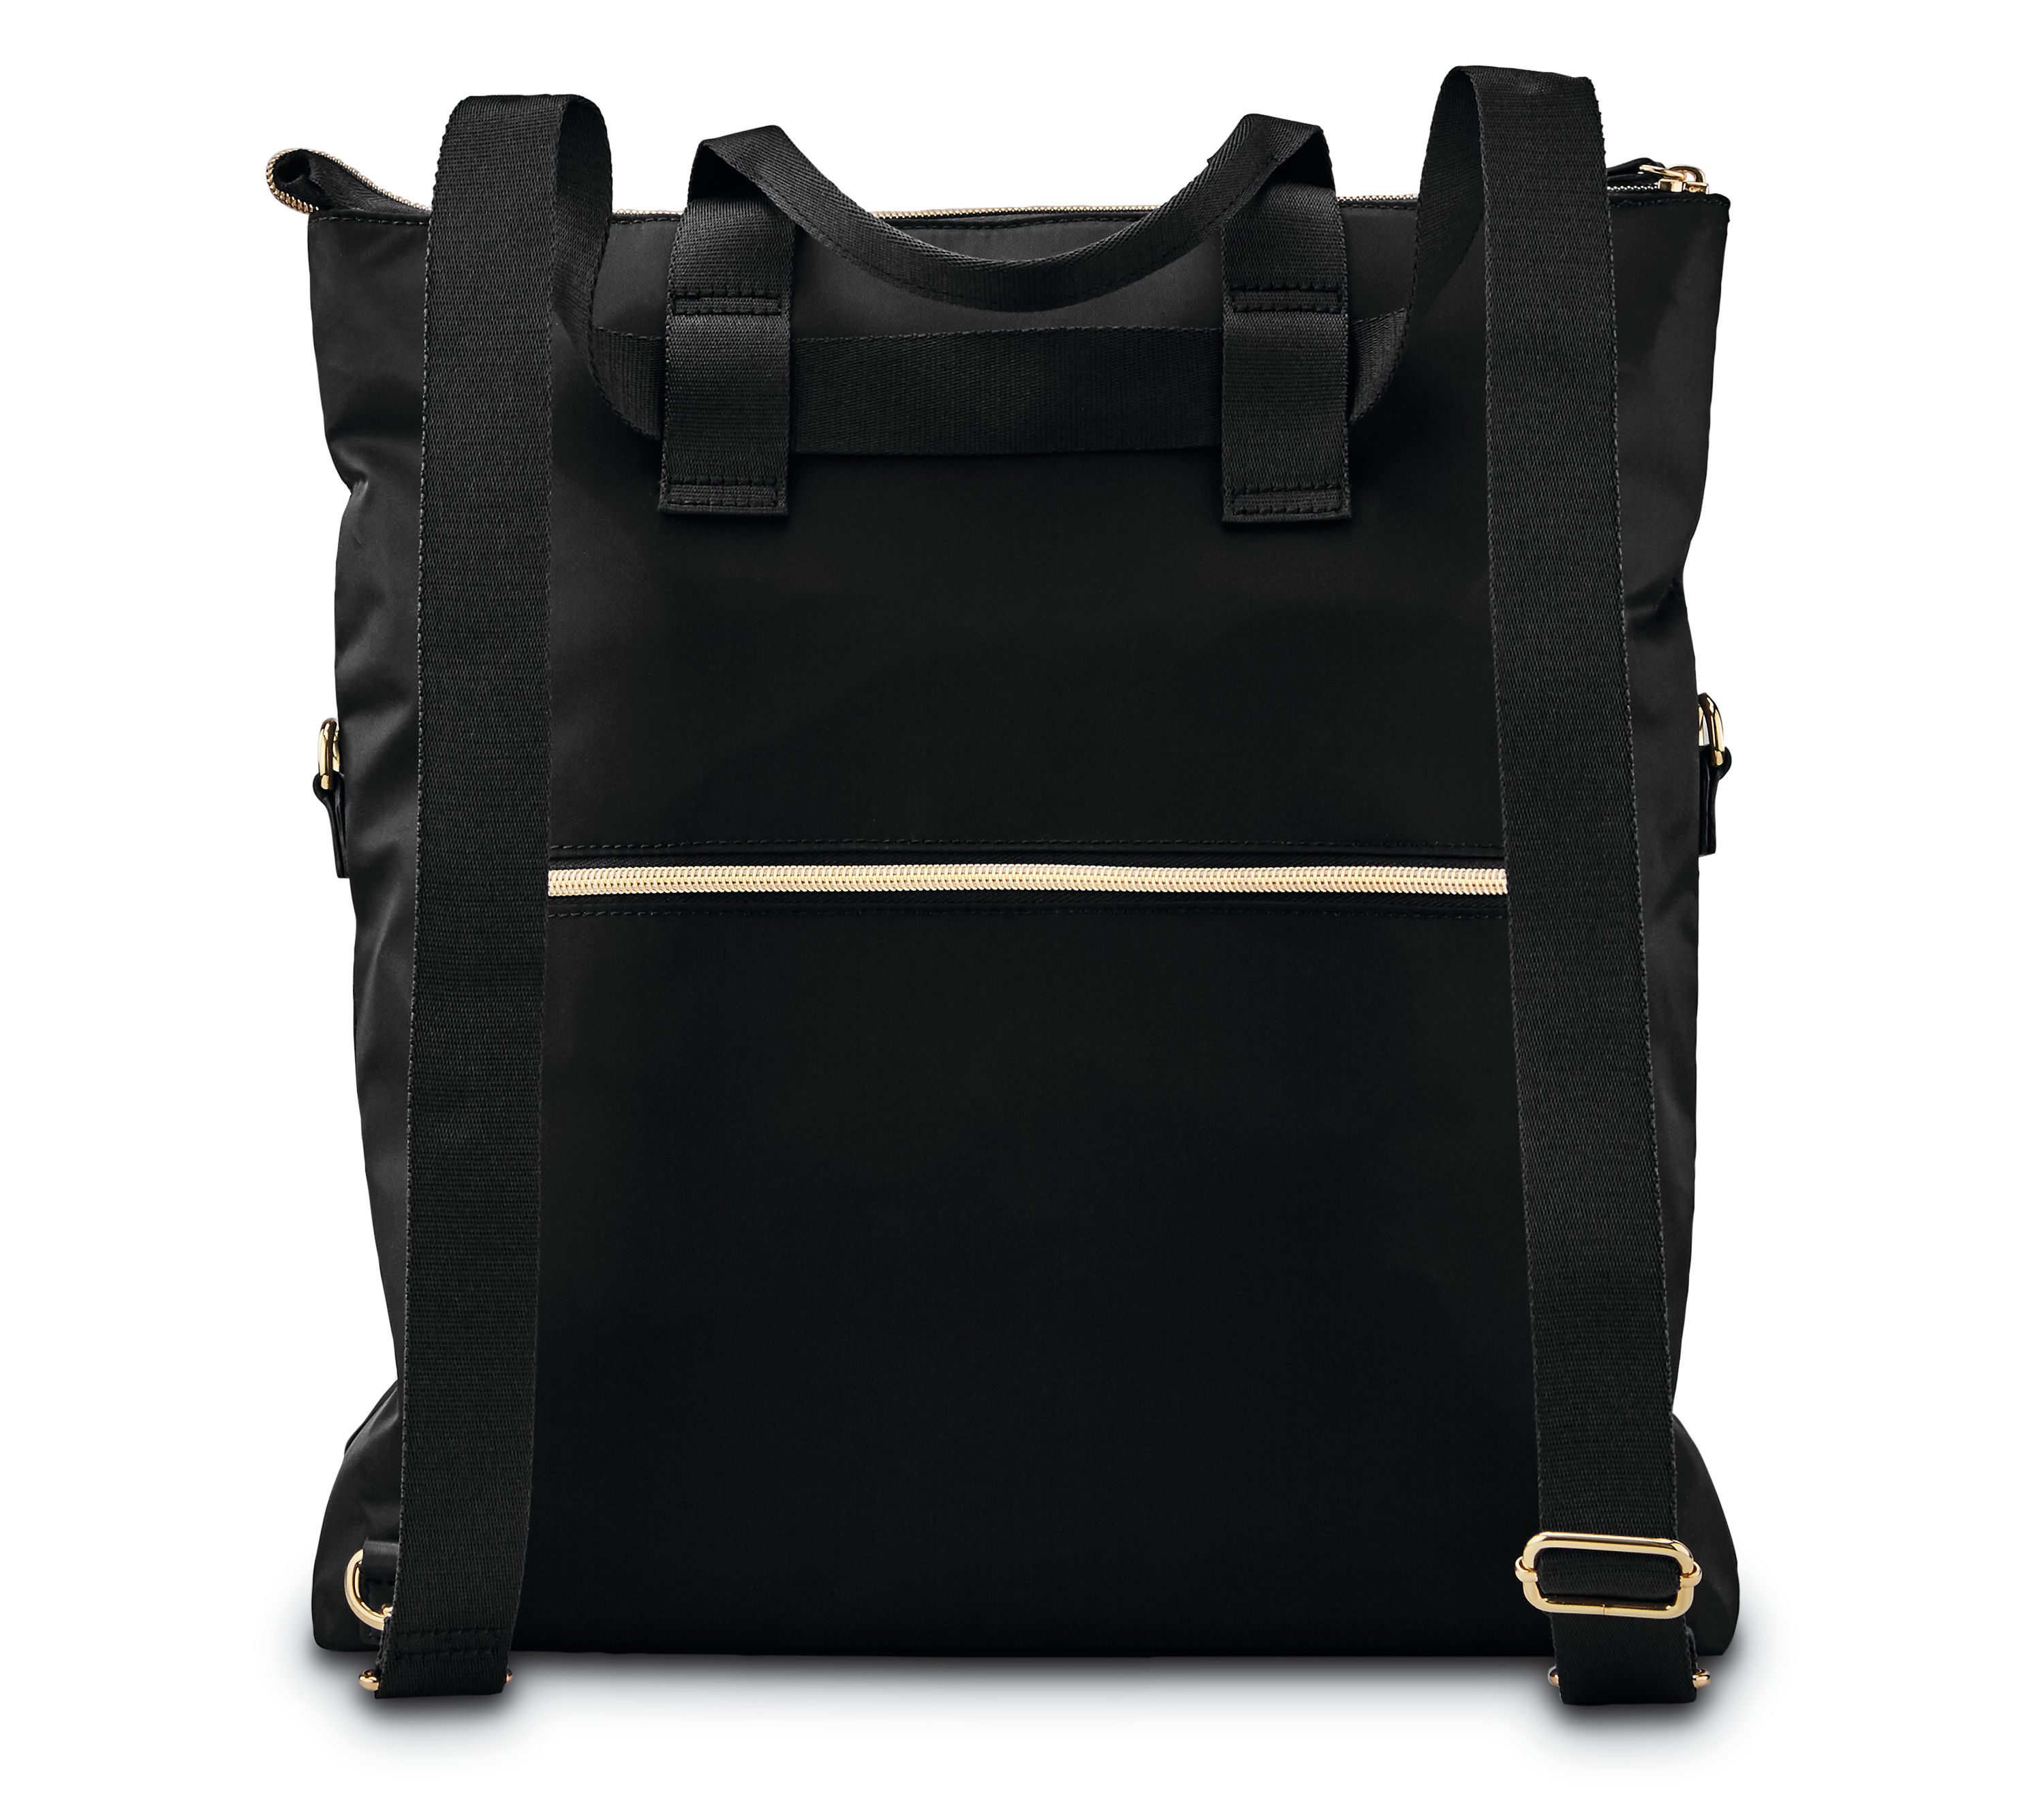 Samsonite Mobile Solution Convertible Backpack - QVC.com